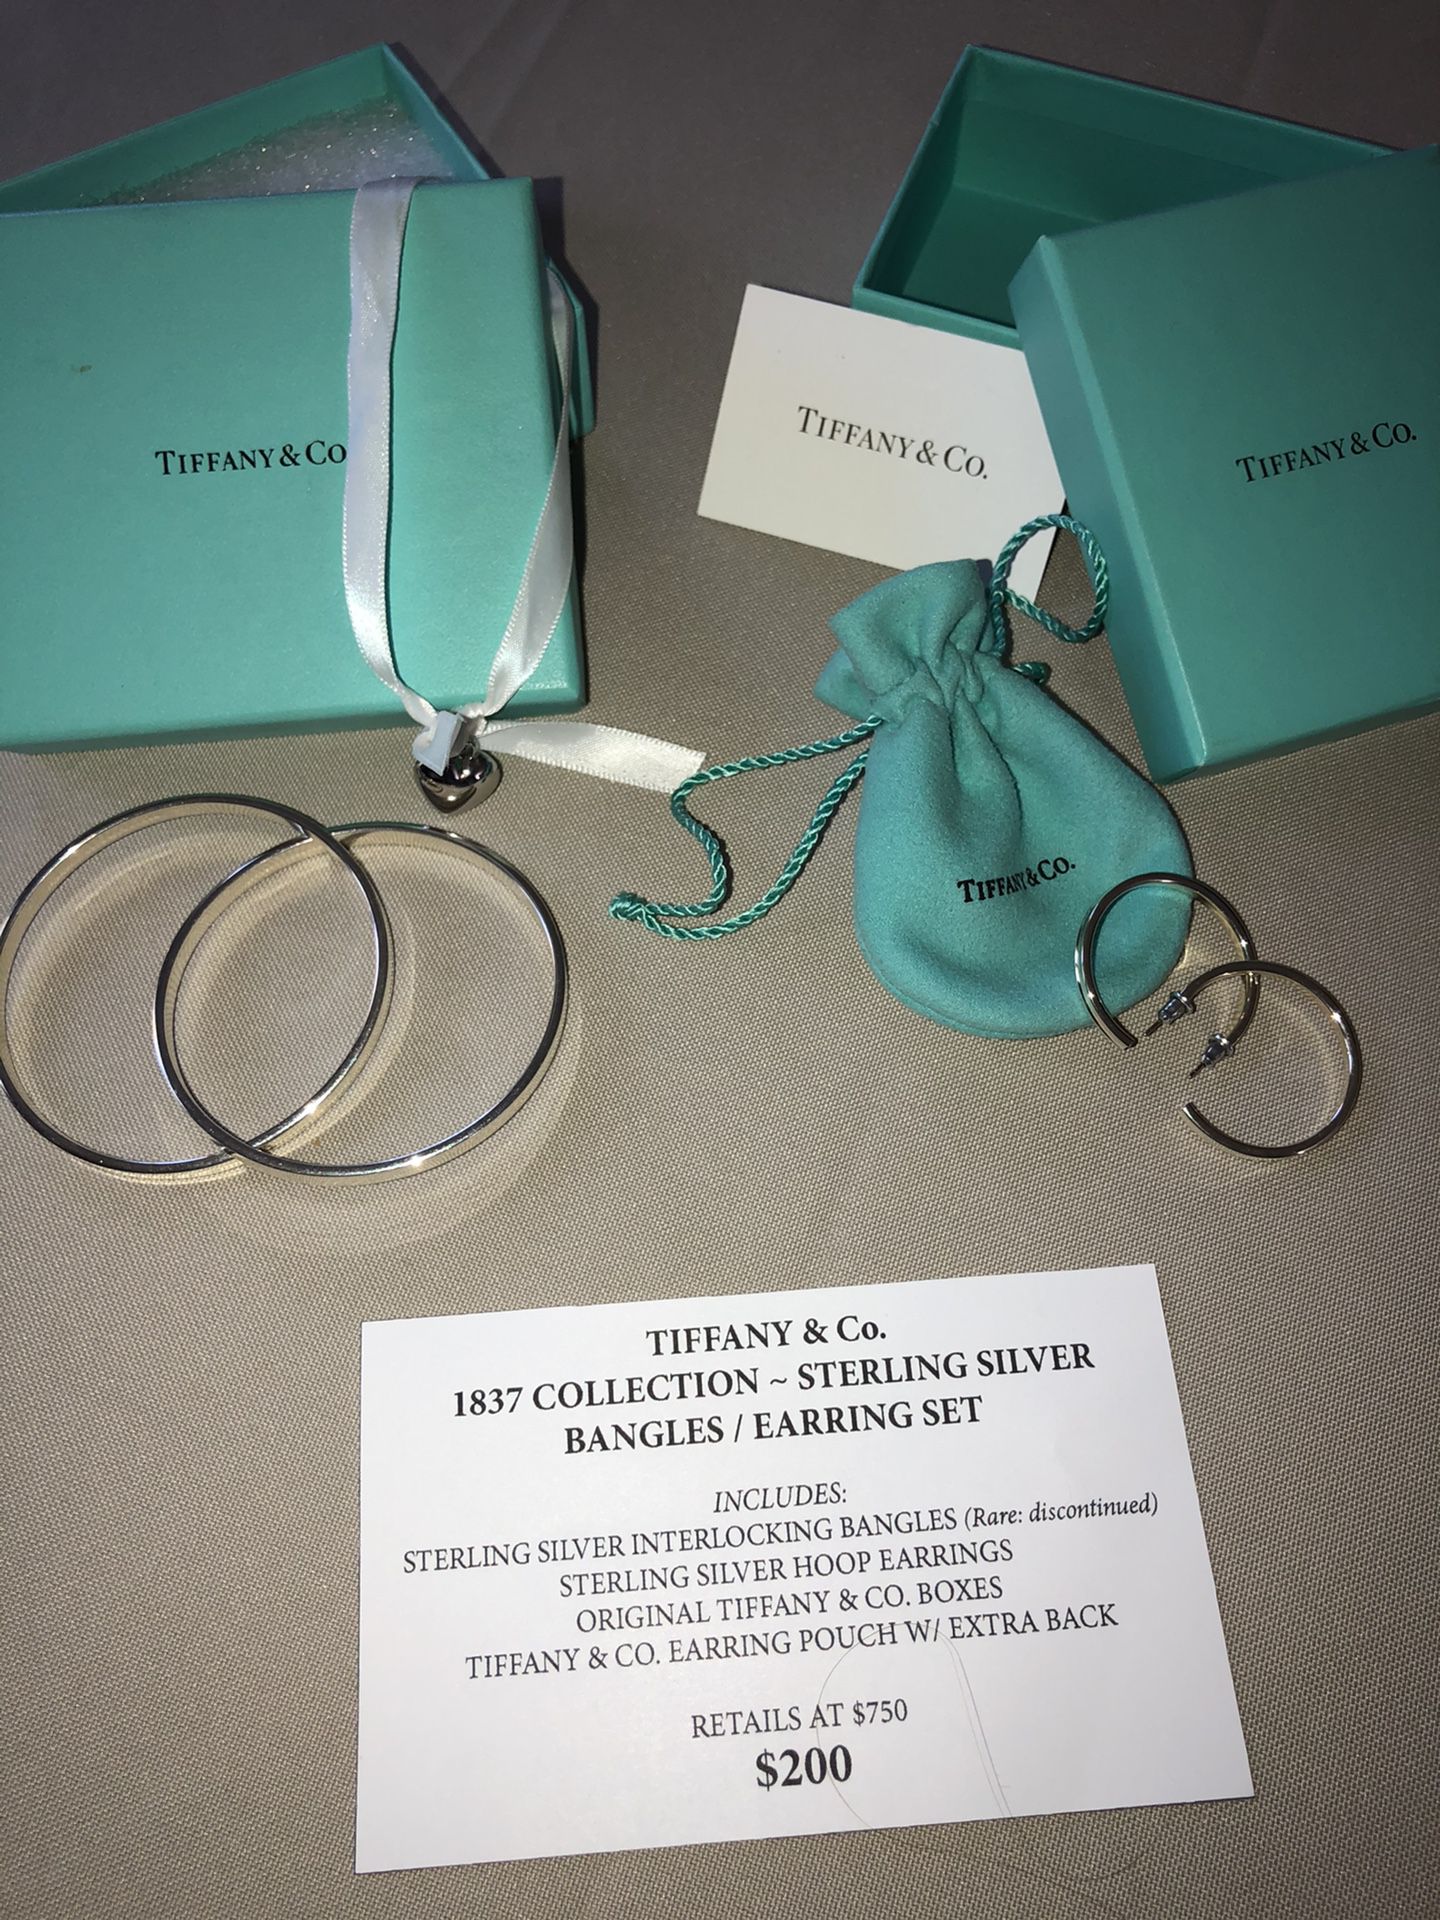 Tiffany & Co. sterling silver bangles/ earring set